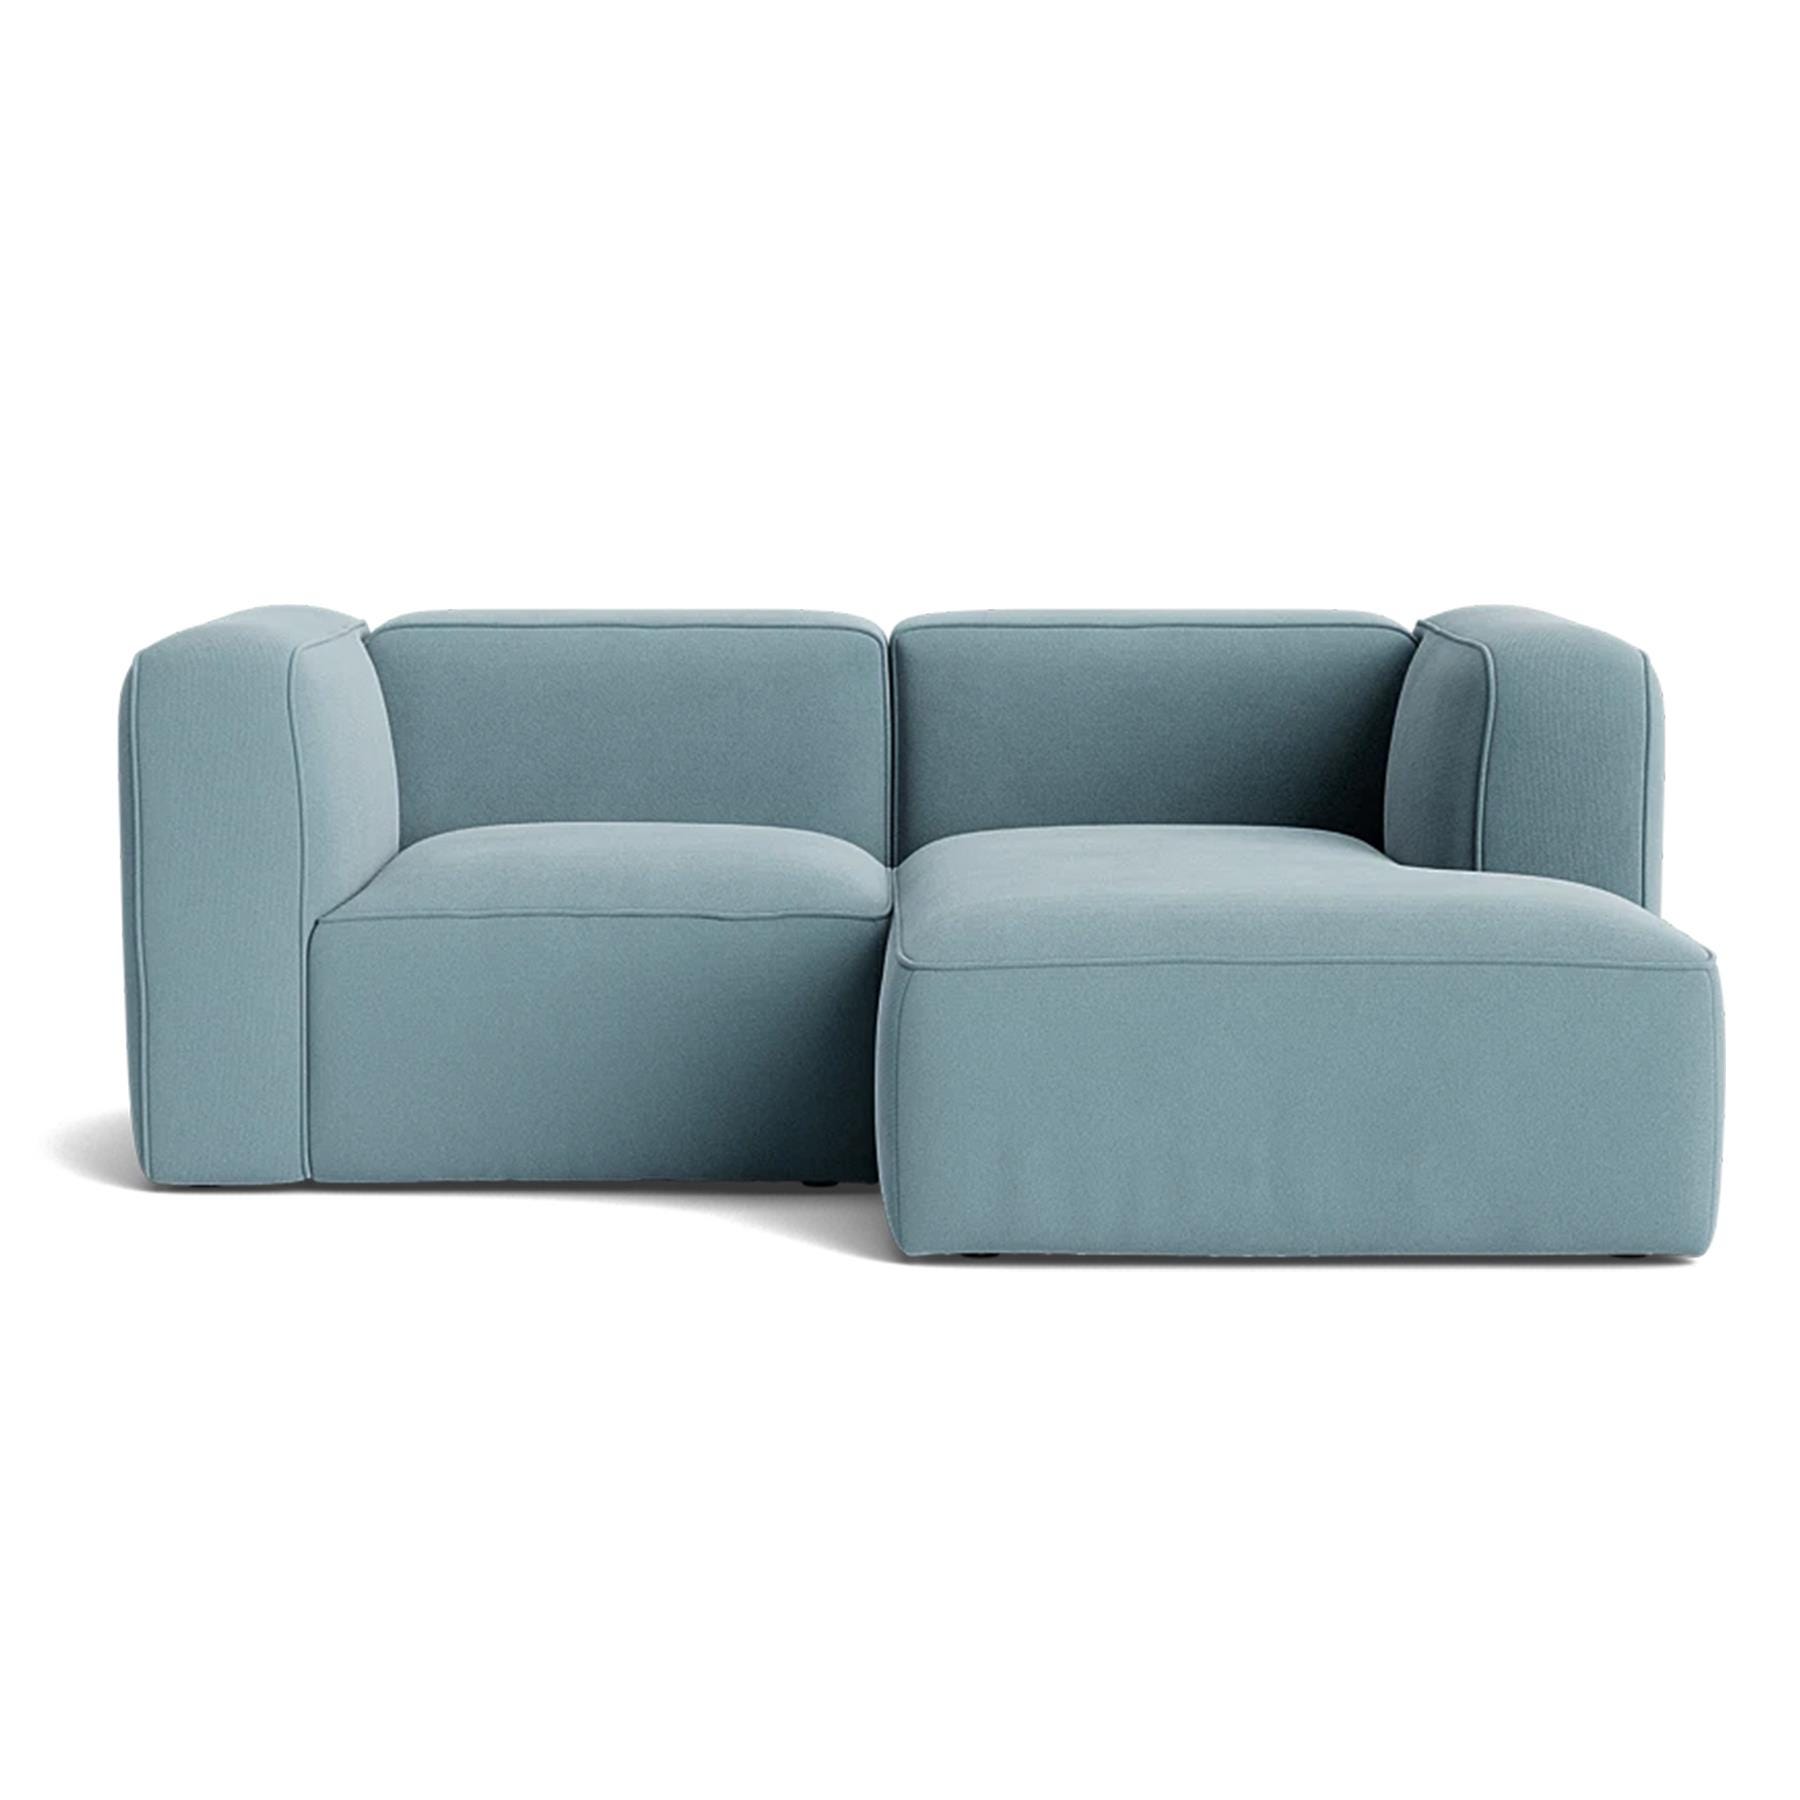 Make Nordic Basecamp Small Sofa Nordic Velvet 150 Right Blue Designer Furniture From Holloways Of Ludlow